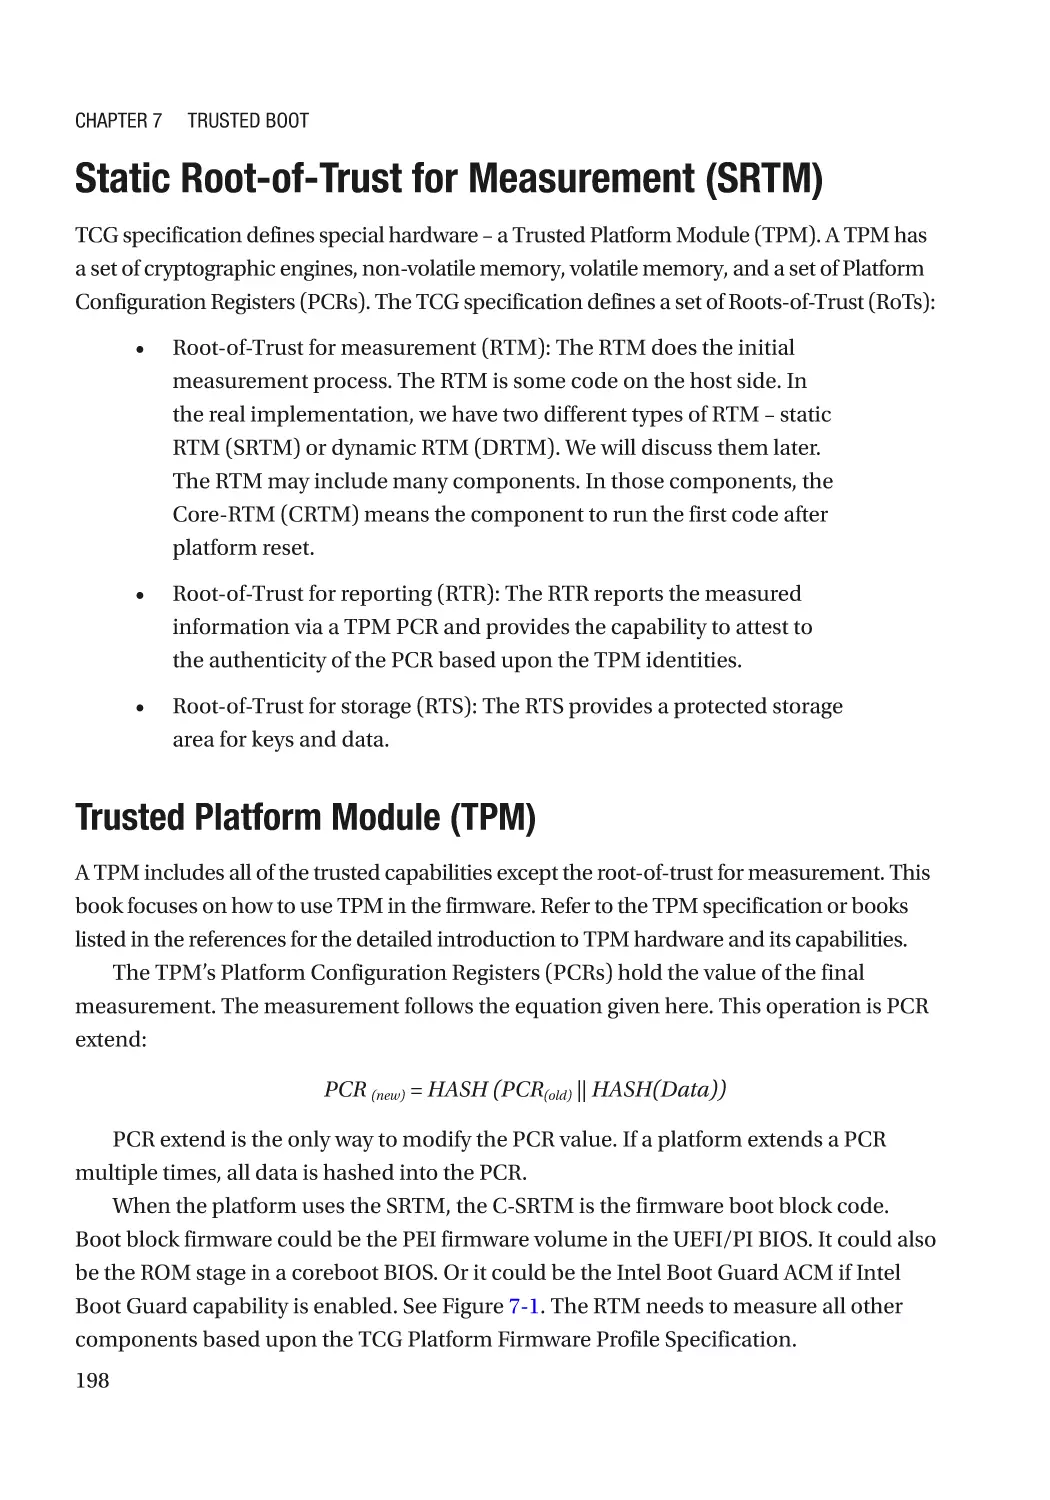 Static Root-of-Trust for Measurement (SRTM)
Trusted Platform Module (TPM)